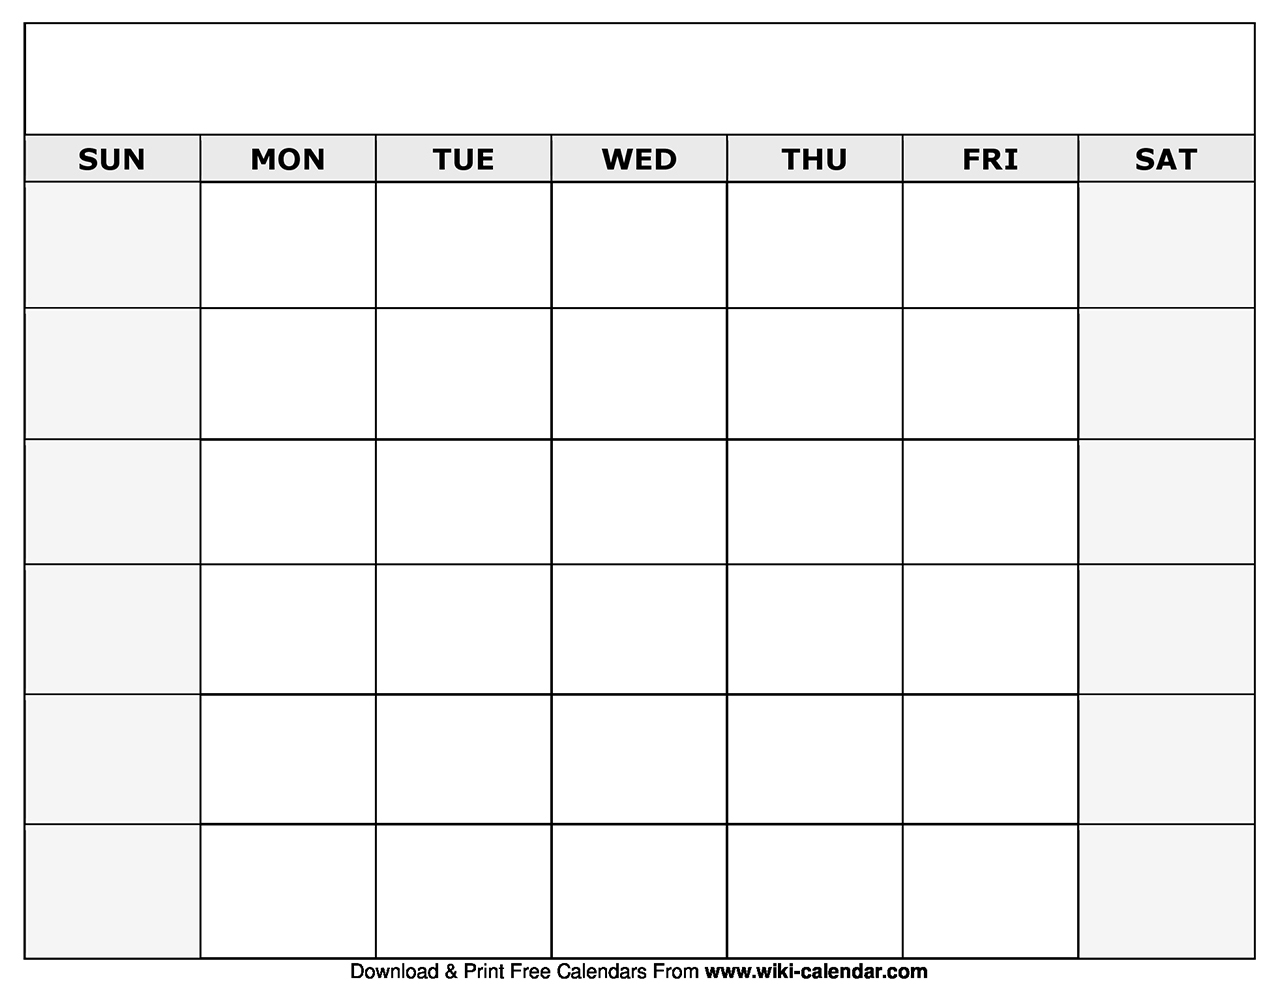 Blank Monthly Calendars To Print - Calendar Inspiration Design